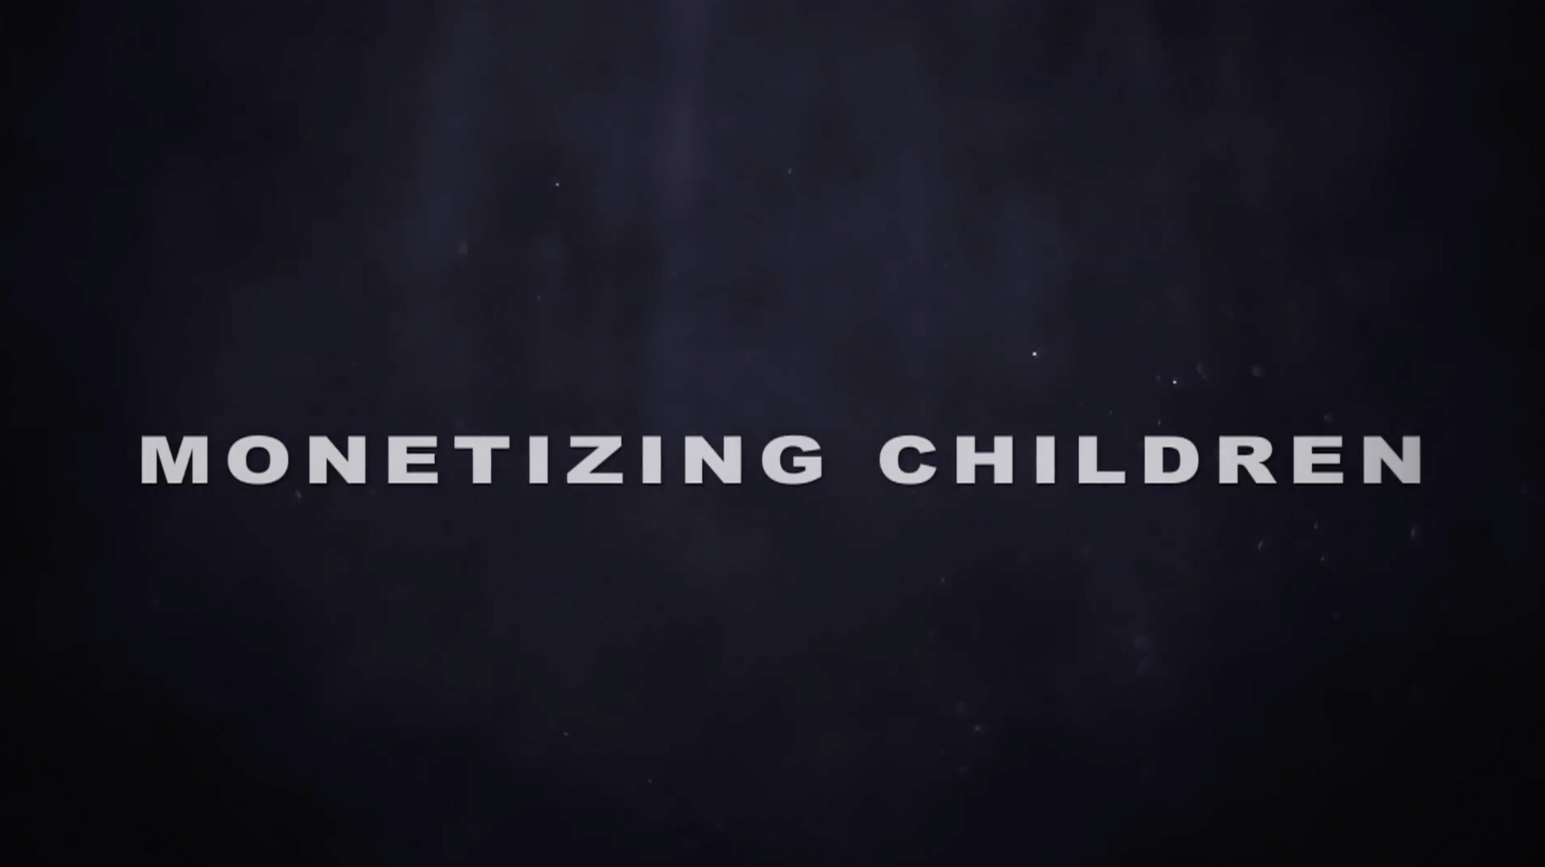 Cha-Ching Your Children: Is Monetizing Them Okay?